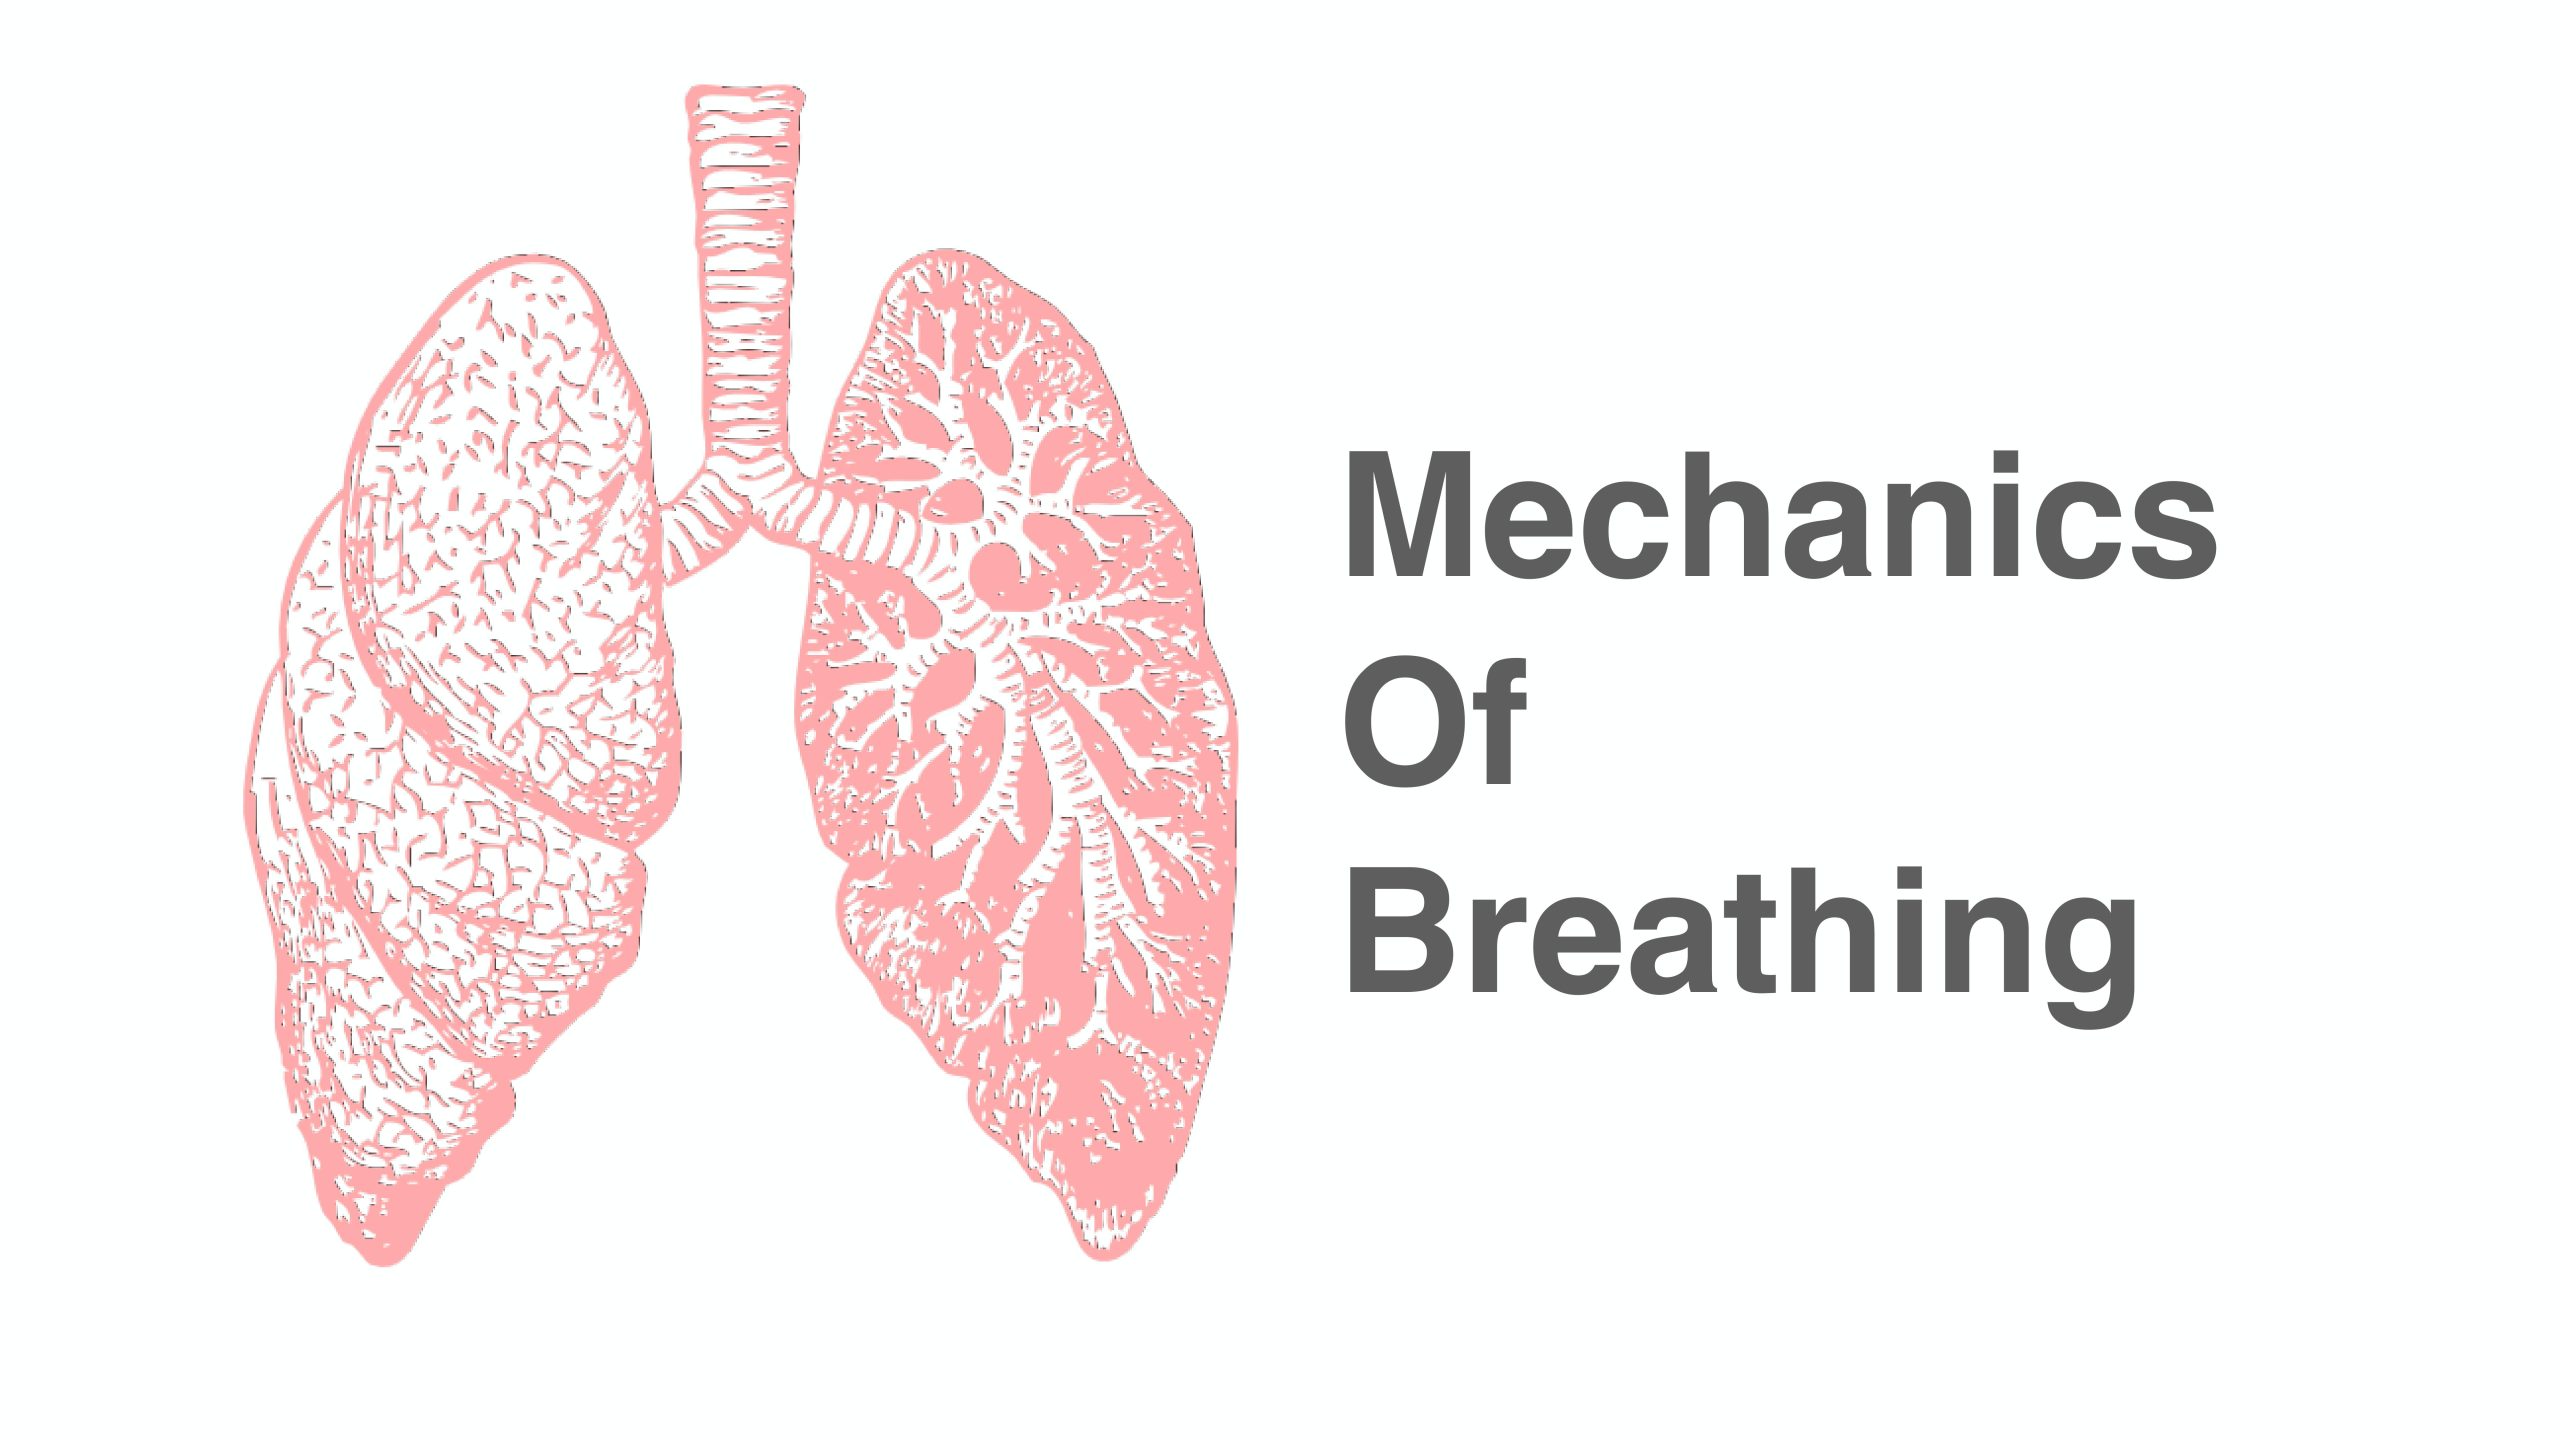 2. Mechanics of Breathing